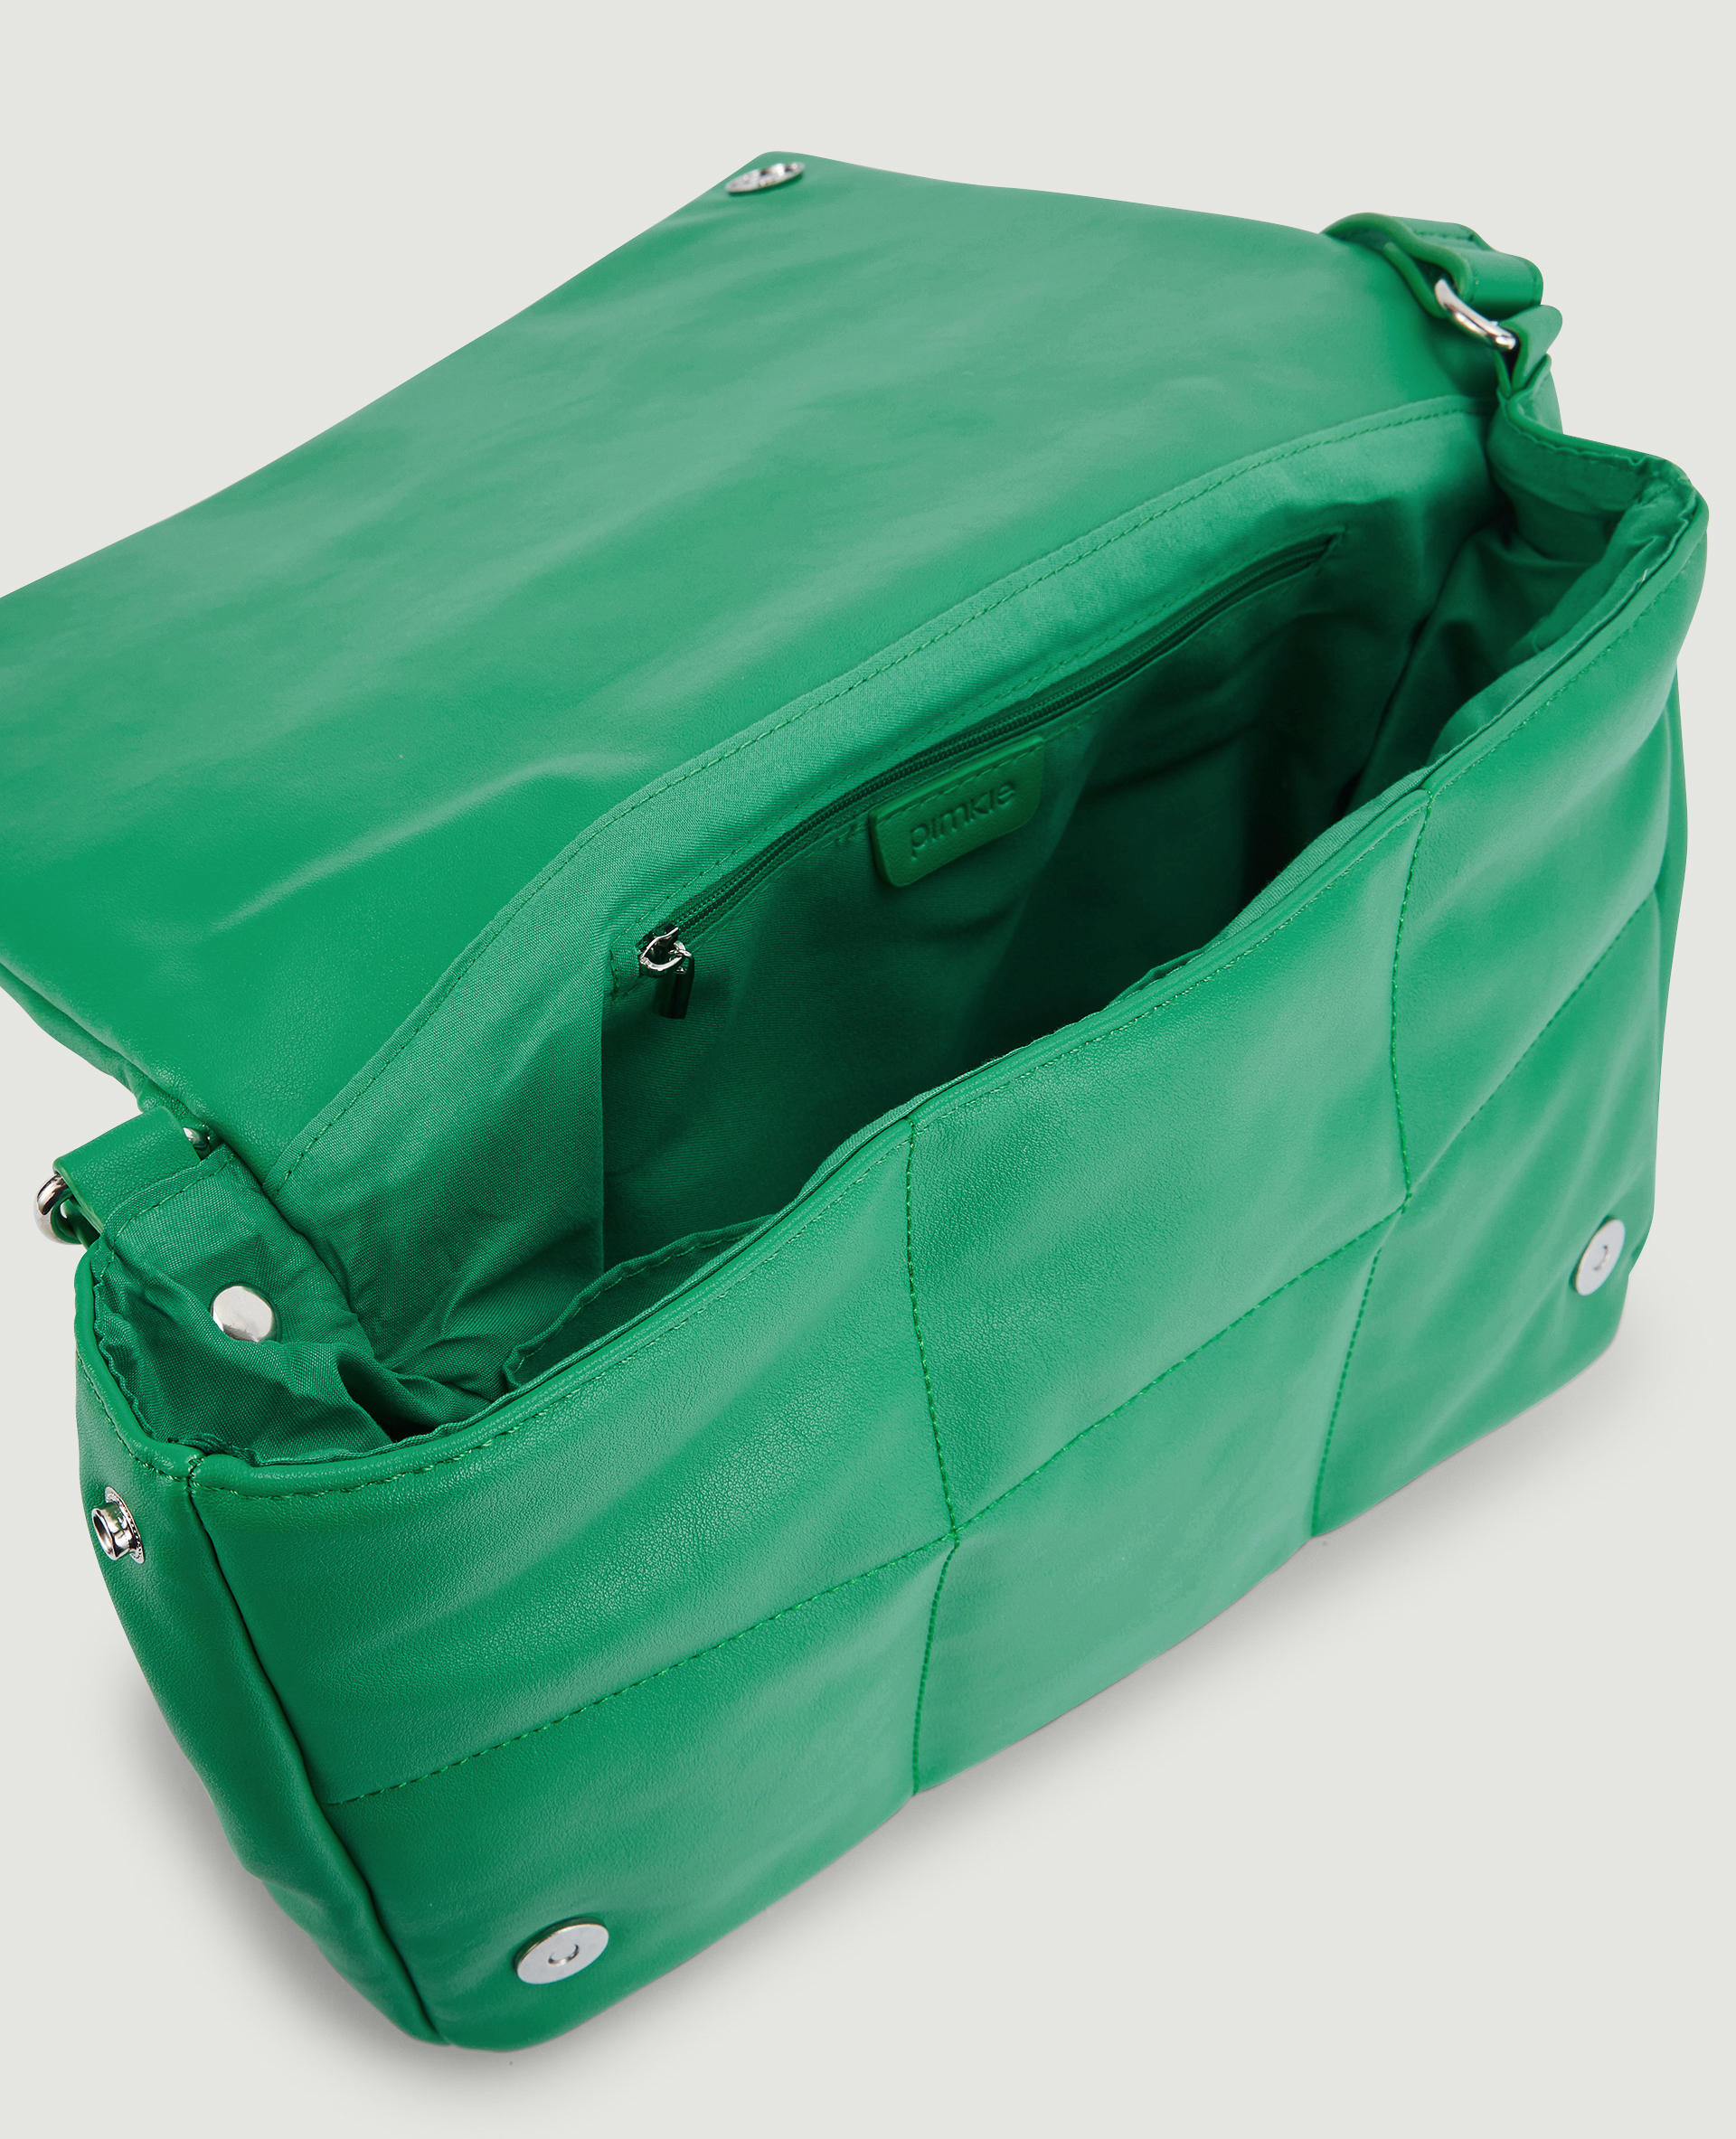 Grand sac matelassé vert - Pimkie